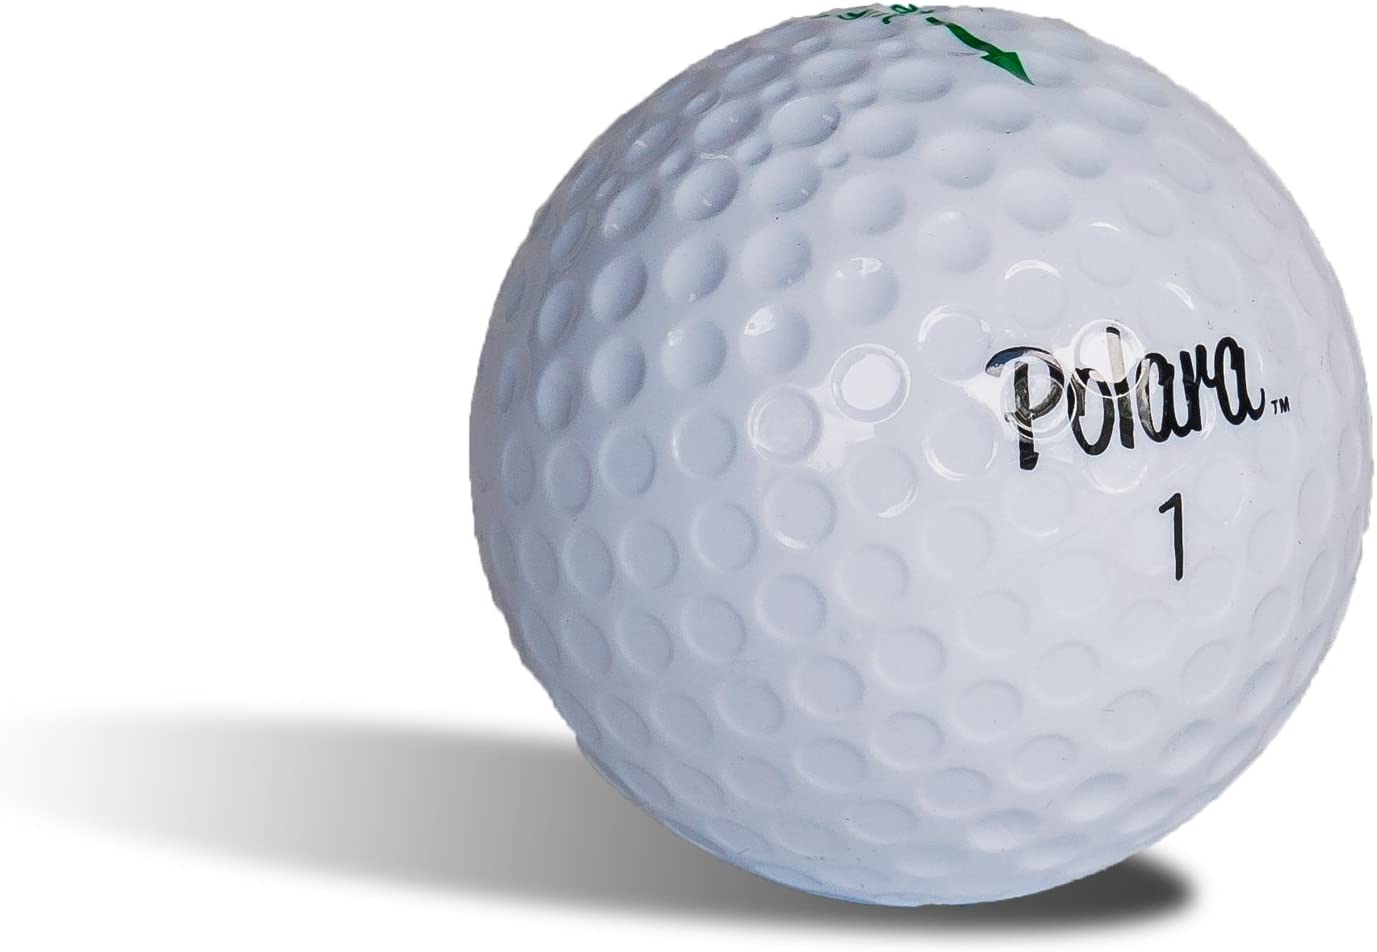 Polara Self Correcting 2-Piece Golf Balls, Pack of 12